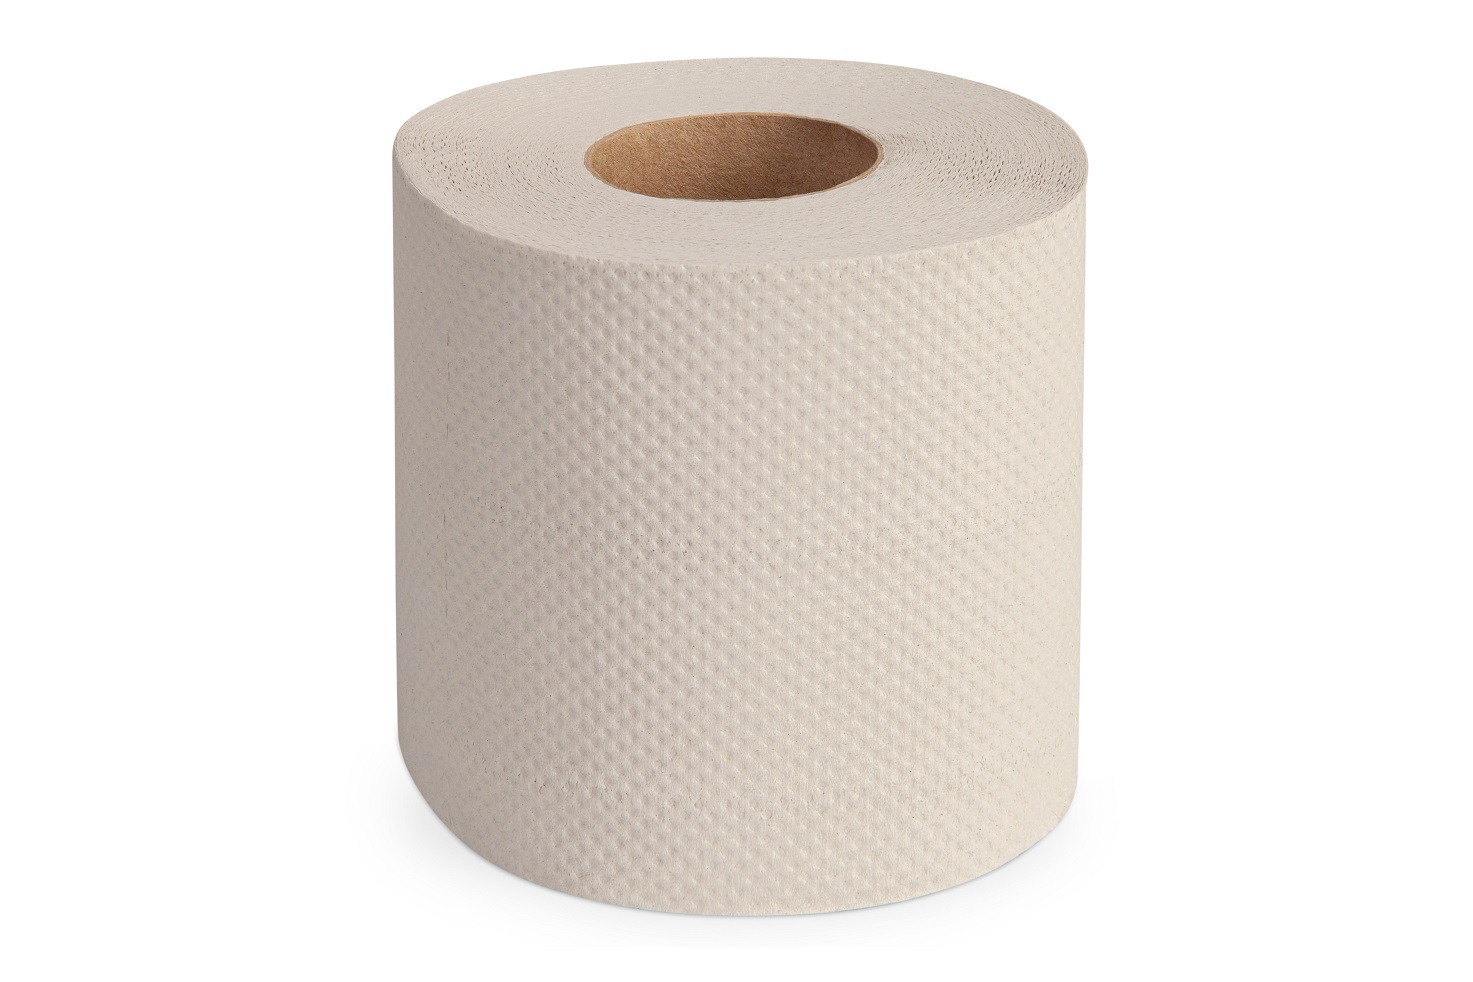 Toilettenpapier Kleinrolle 2-lagig, 400 Blatt - Recycling